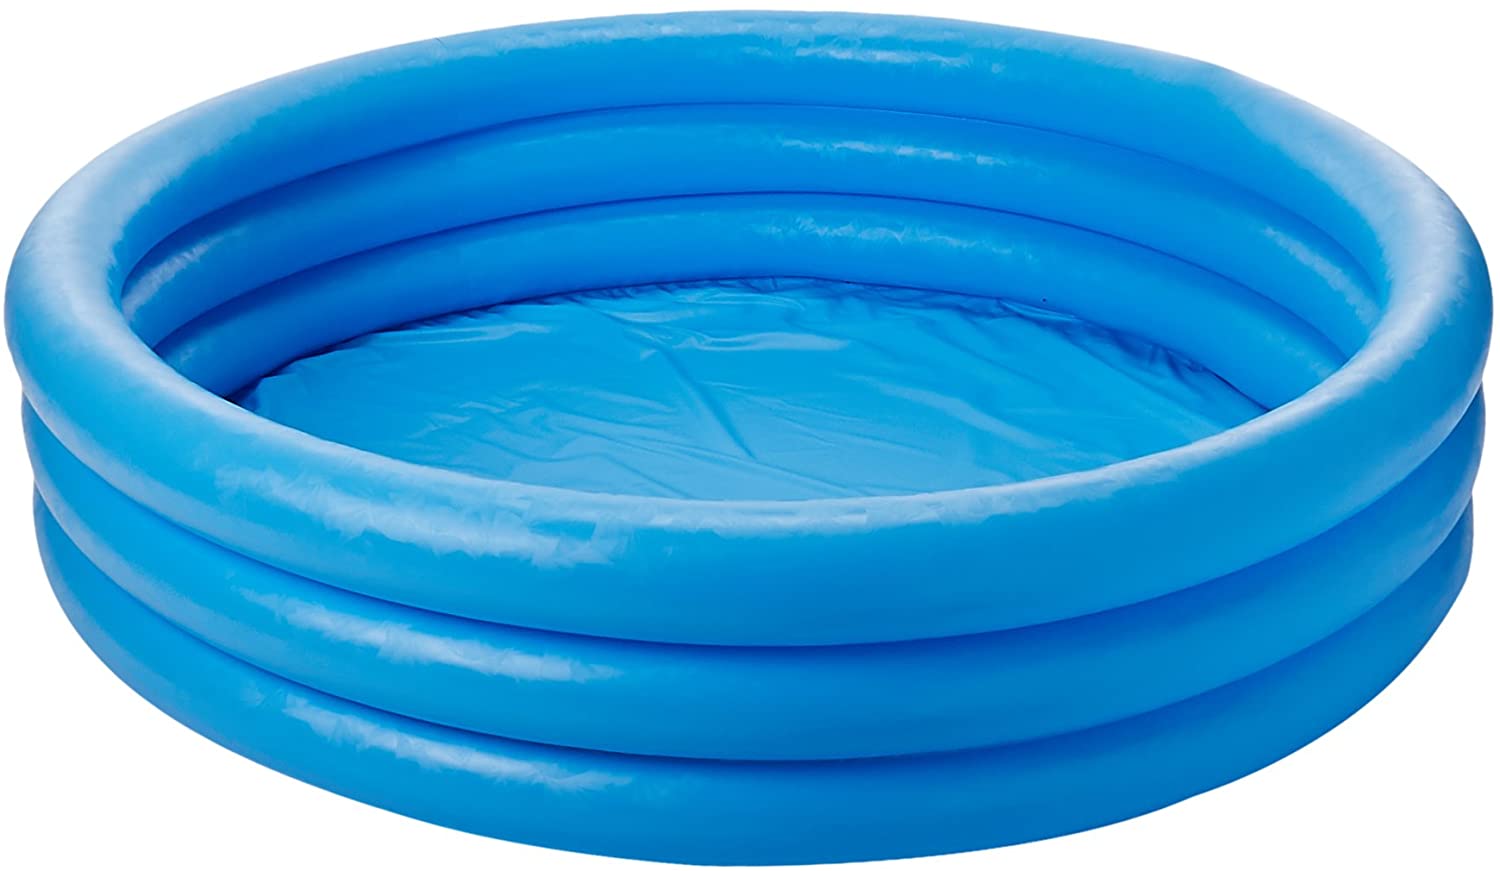 Intex Blue Inflatable Pool